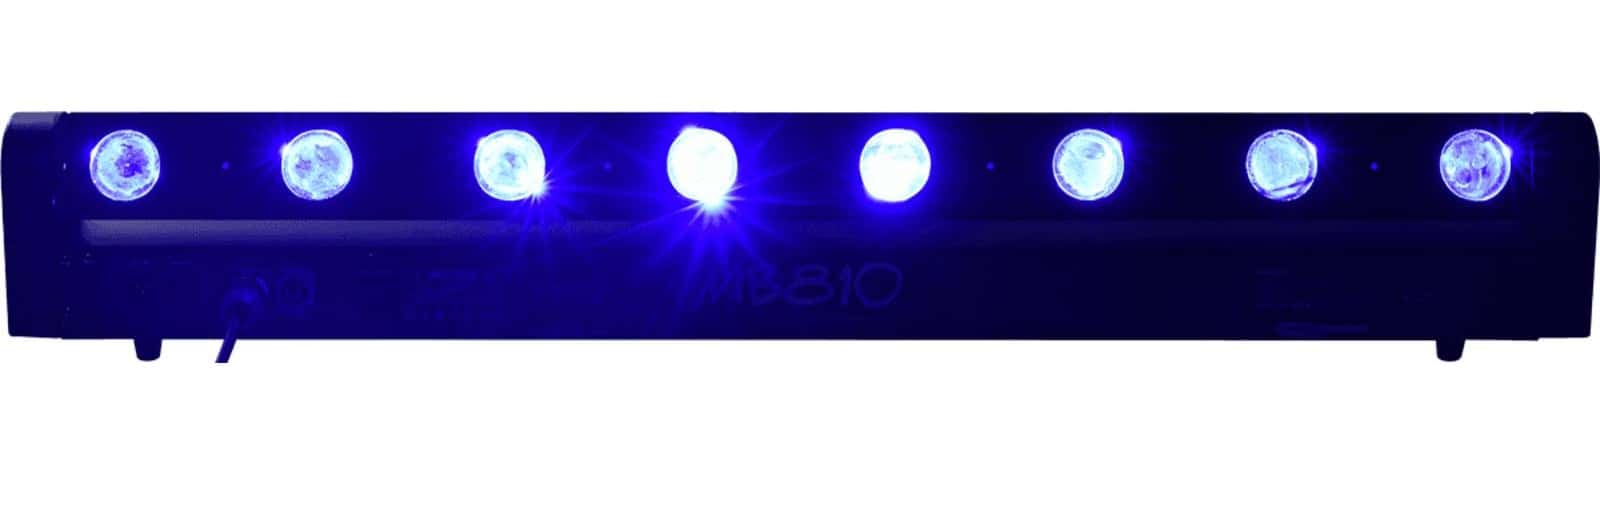 ALGAM LIGHTING MB 810 - 8 RGBW GEMOTORISEERDE LED-BAR